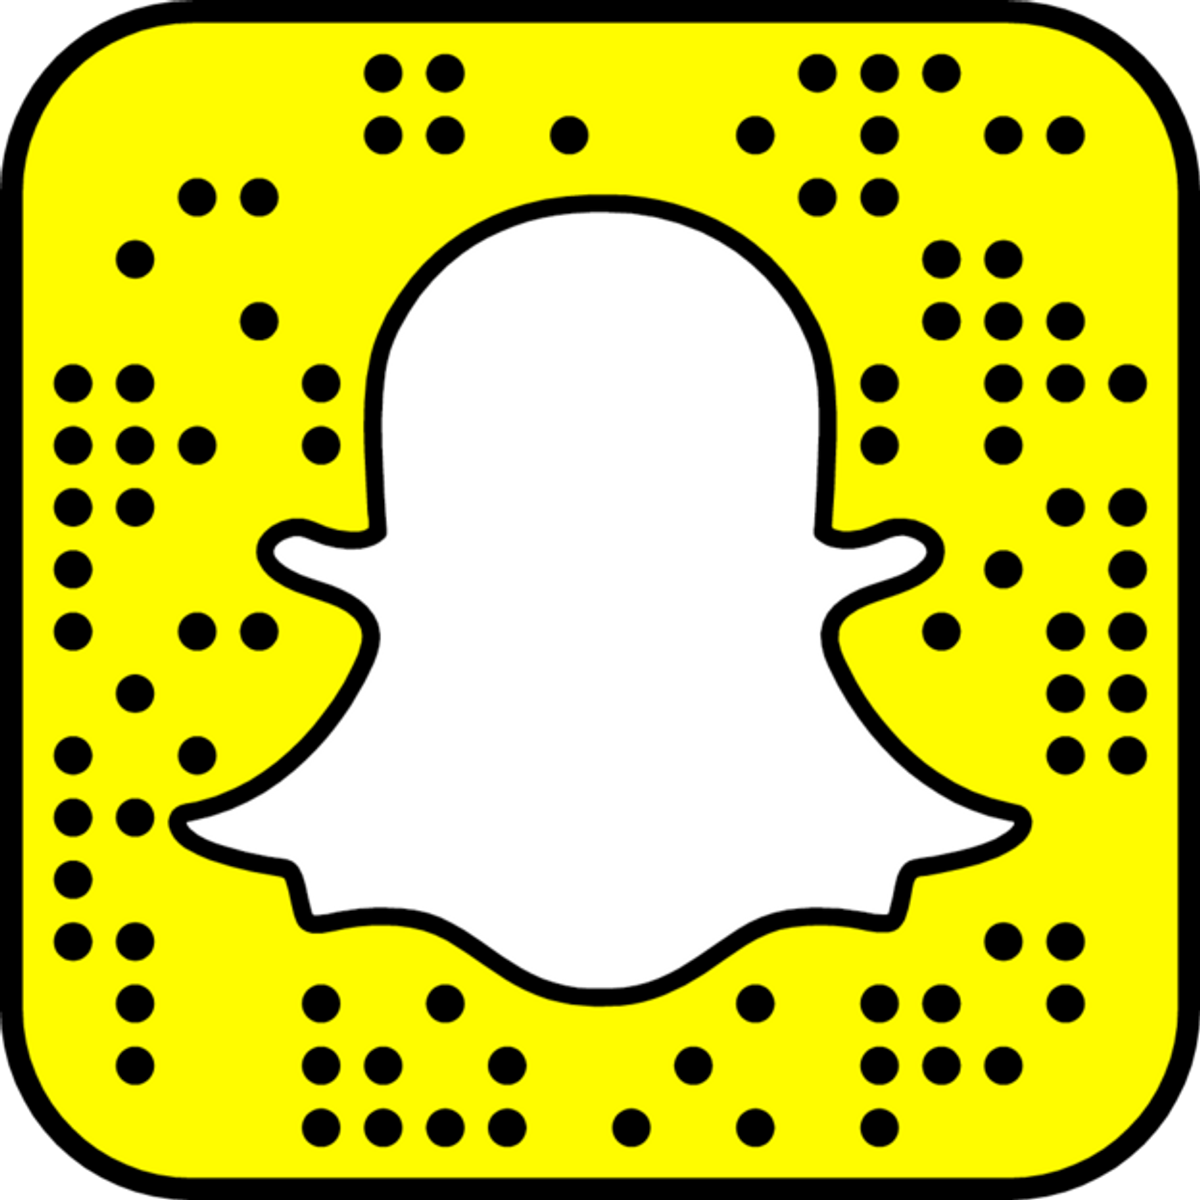 A Newer Social Foe: Snapchat